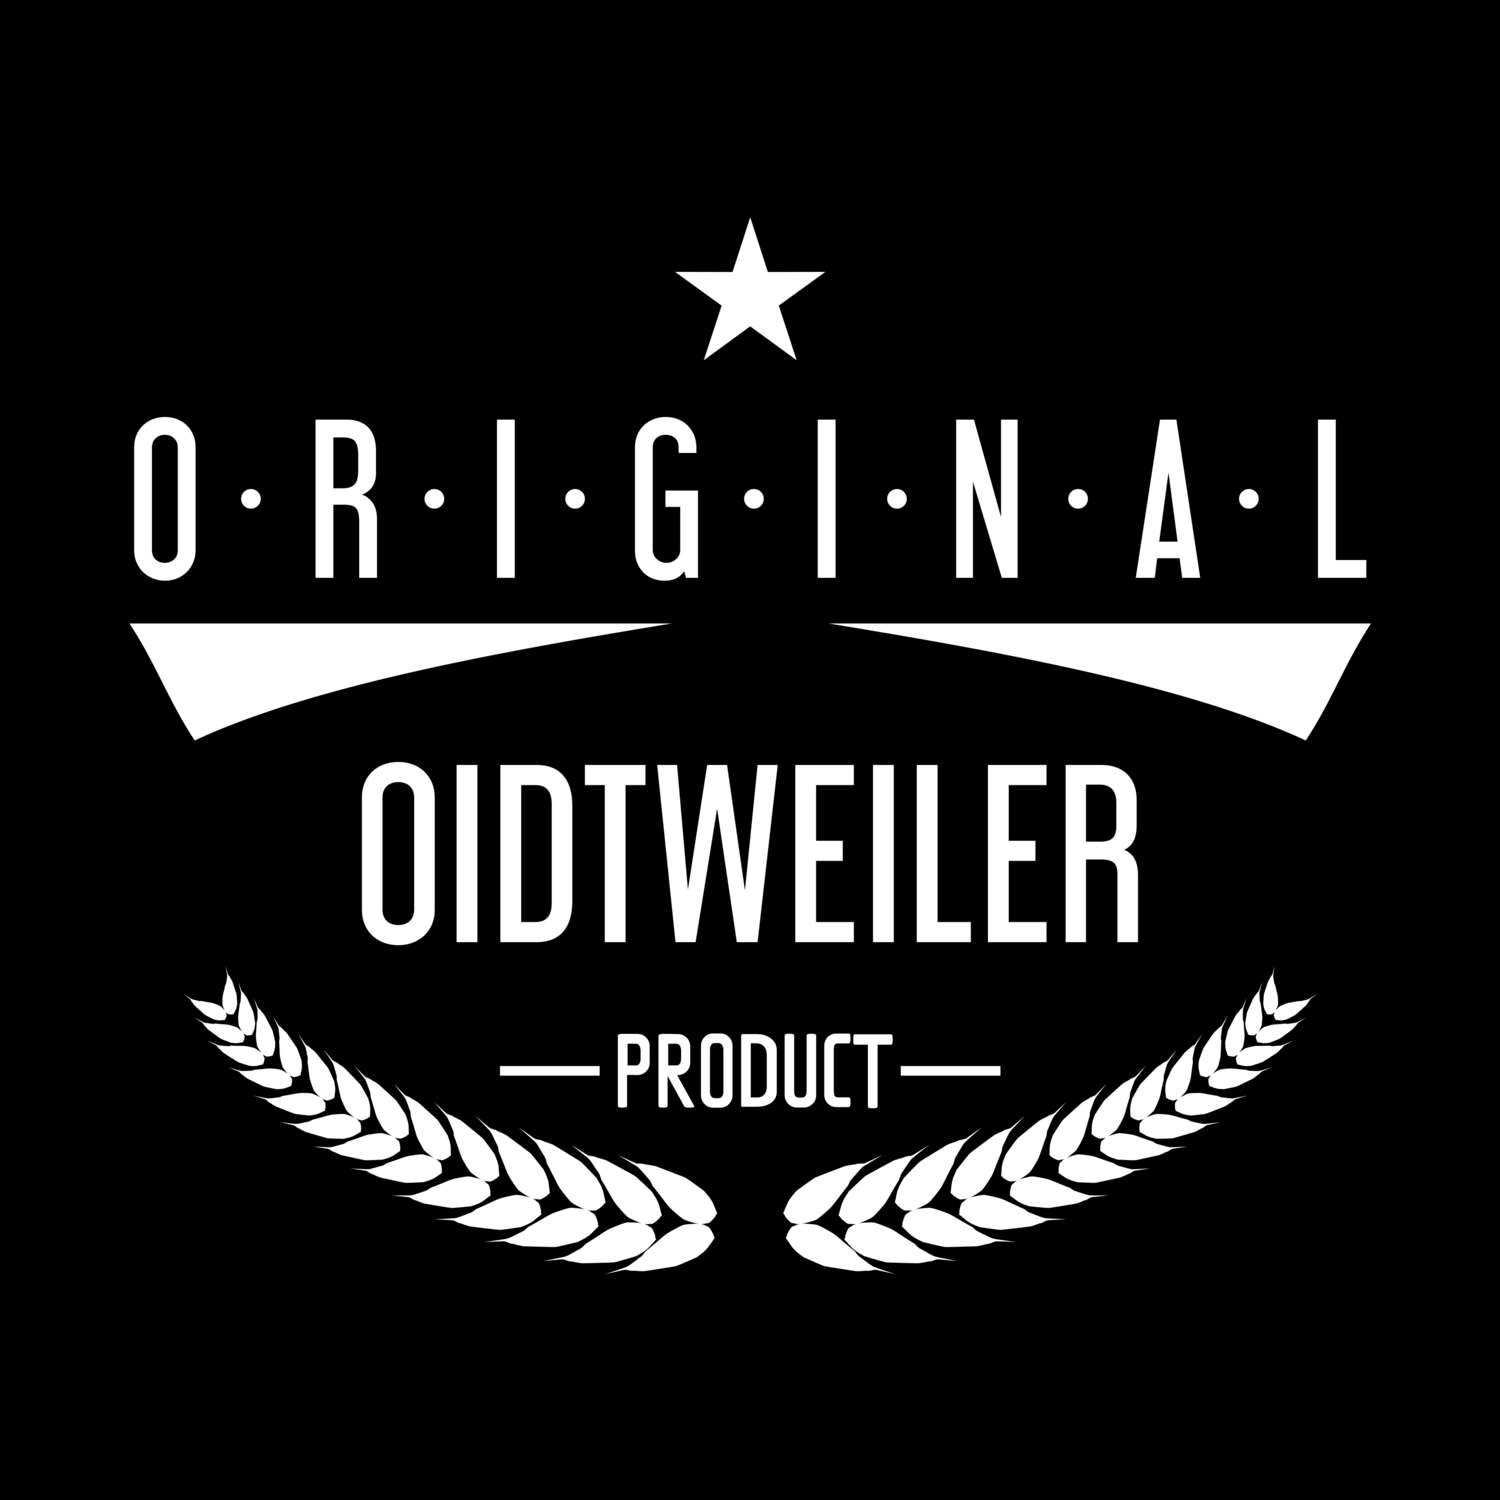 Oidtweiler T-Shirt »Original Product«